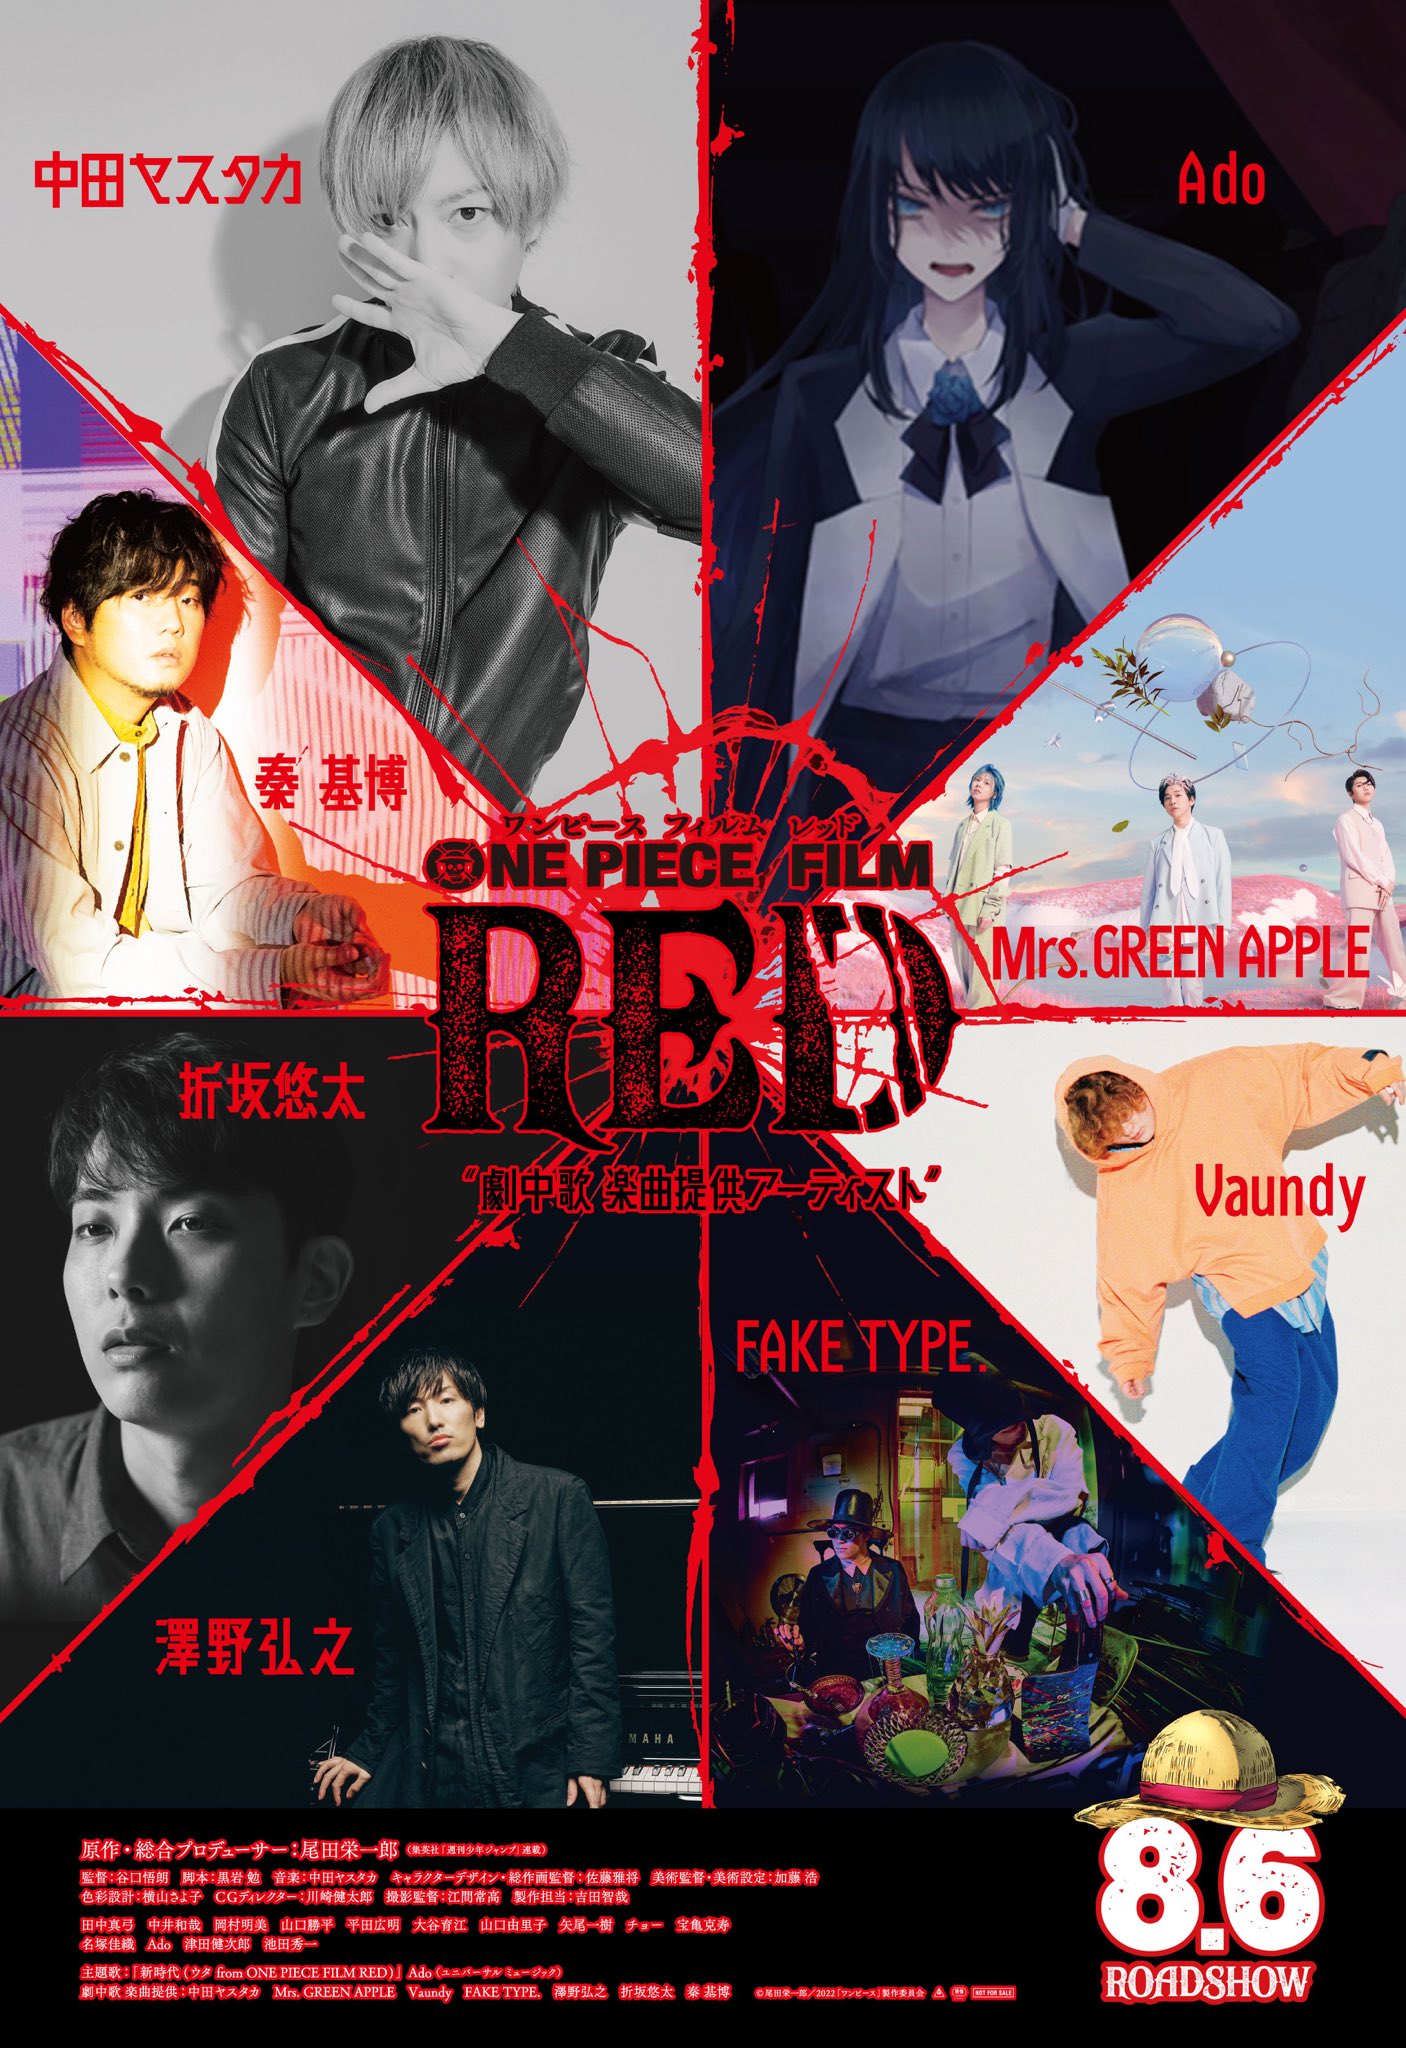 Singing sensation Uta from 'One Piece Film Red' to take music tour in Japan  